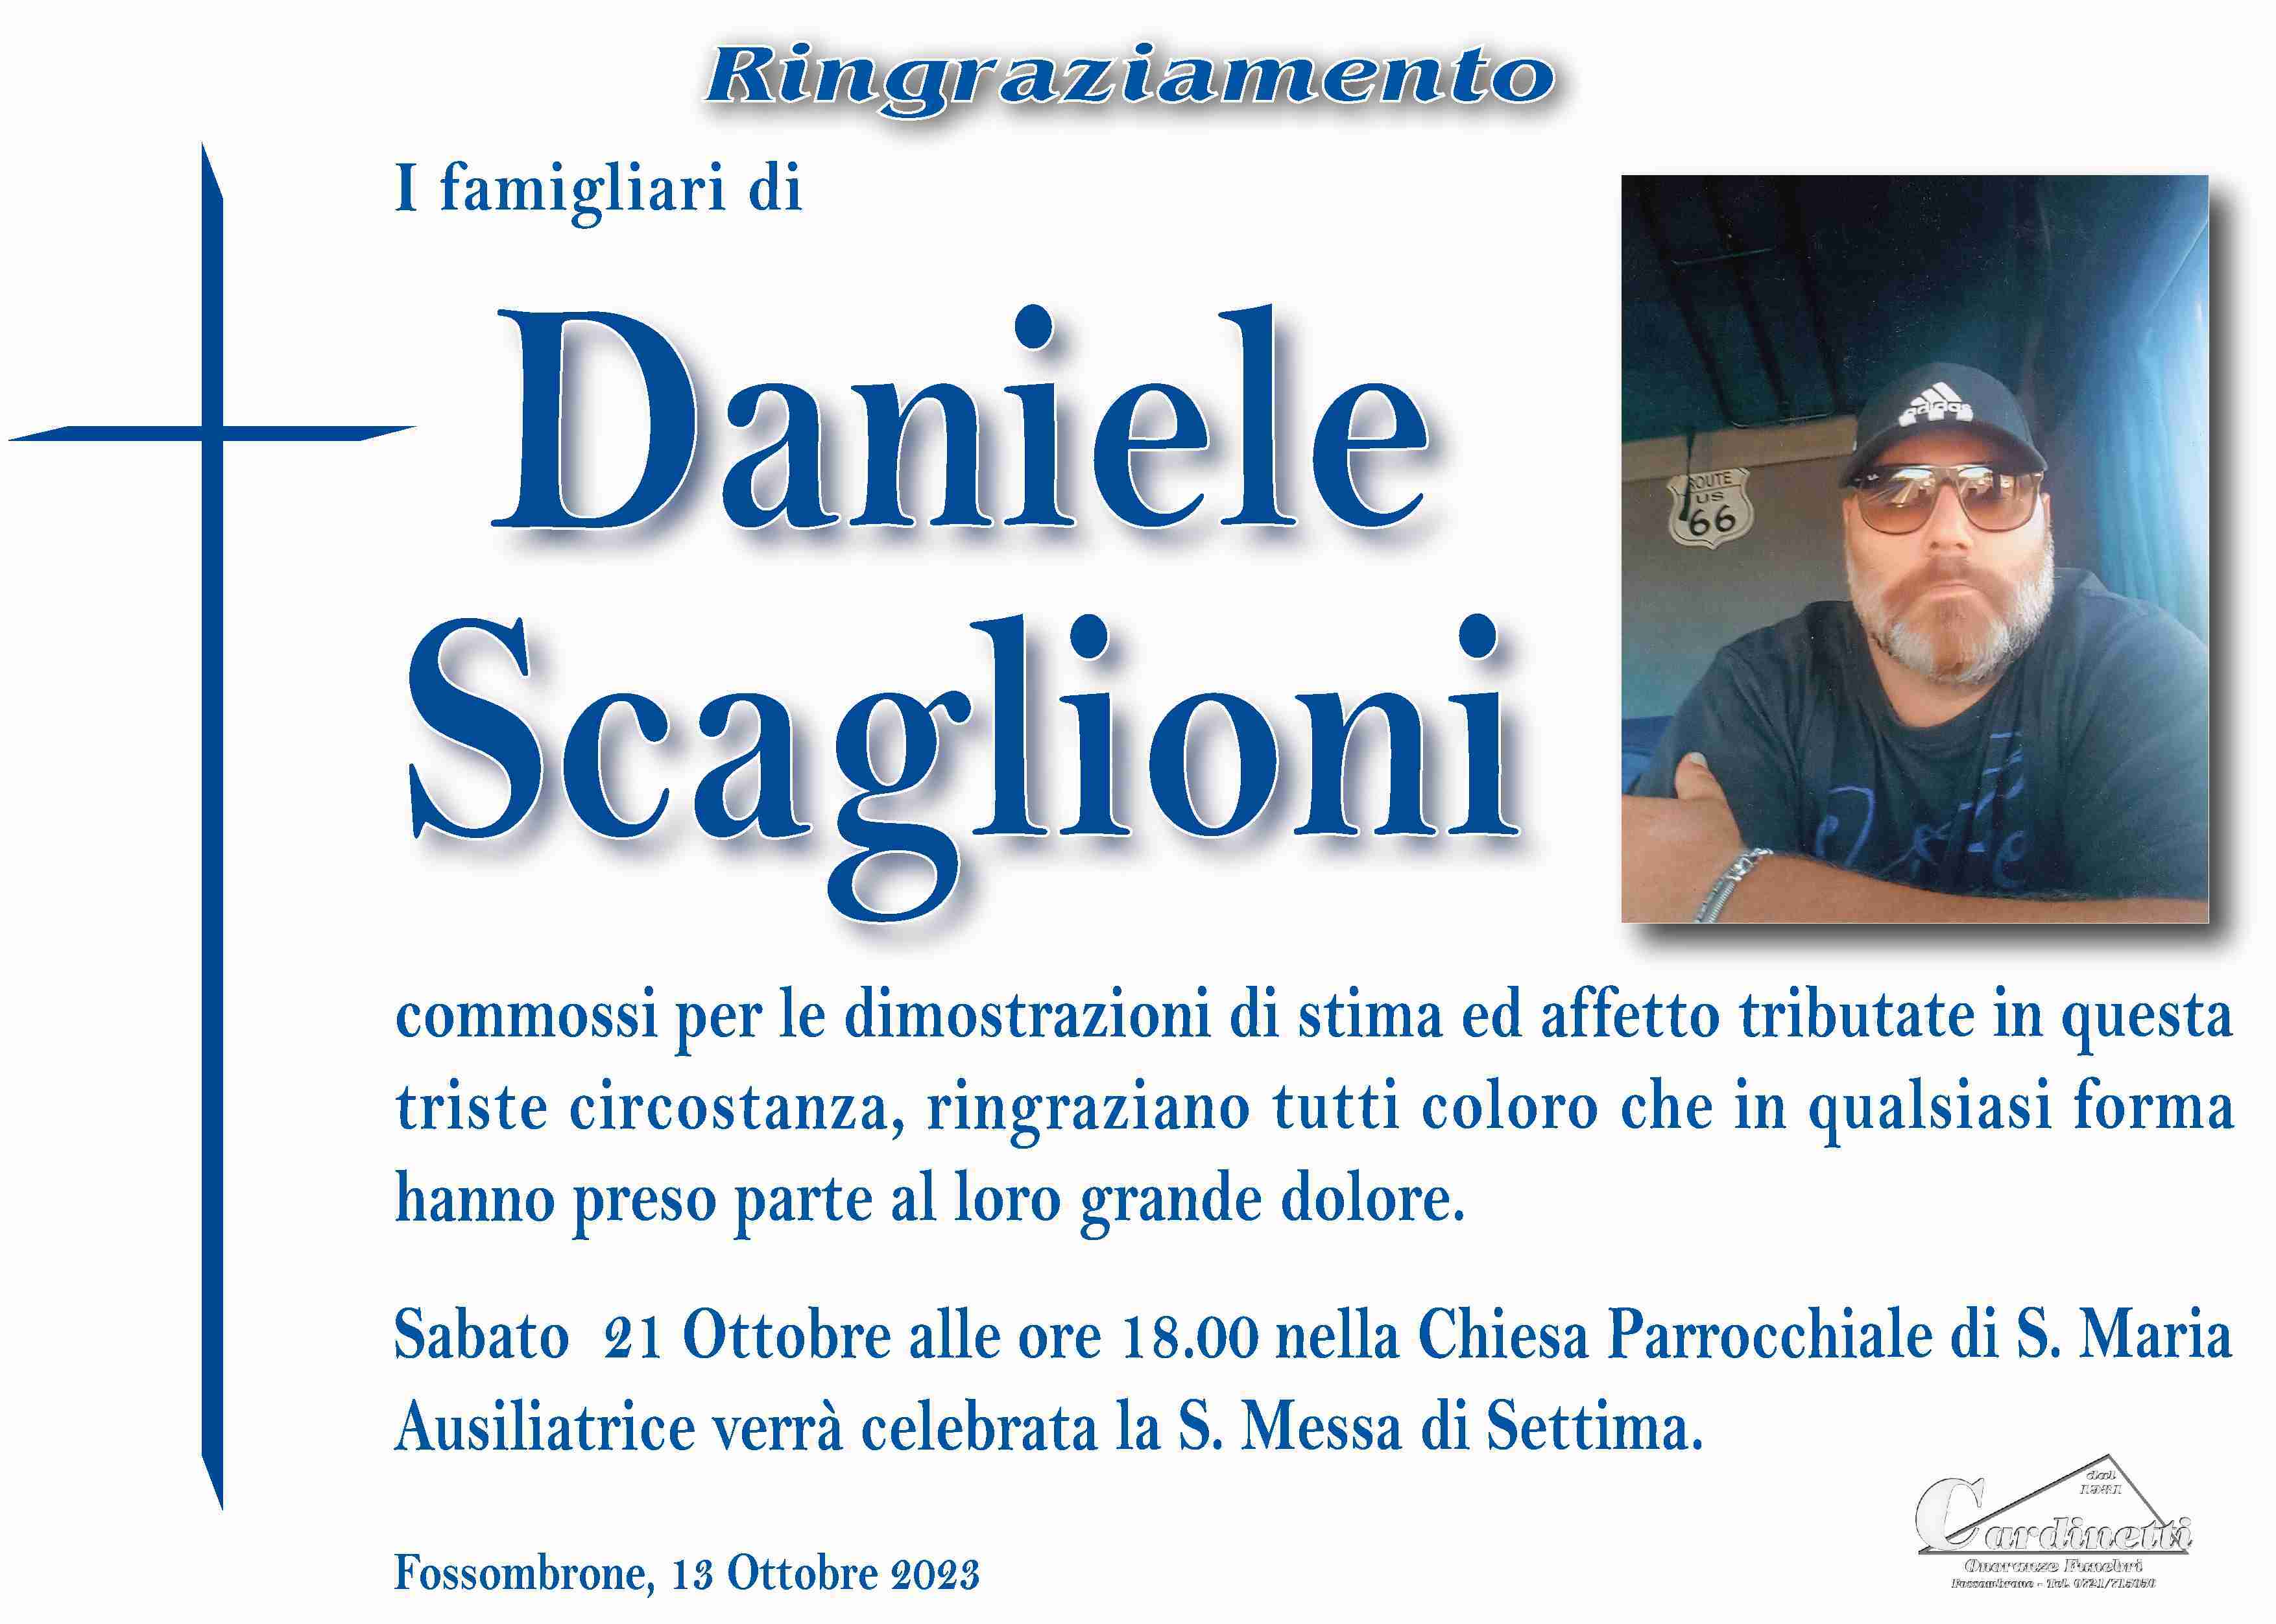 Daniele Scaglioni